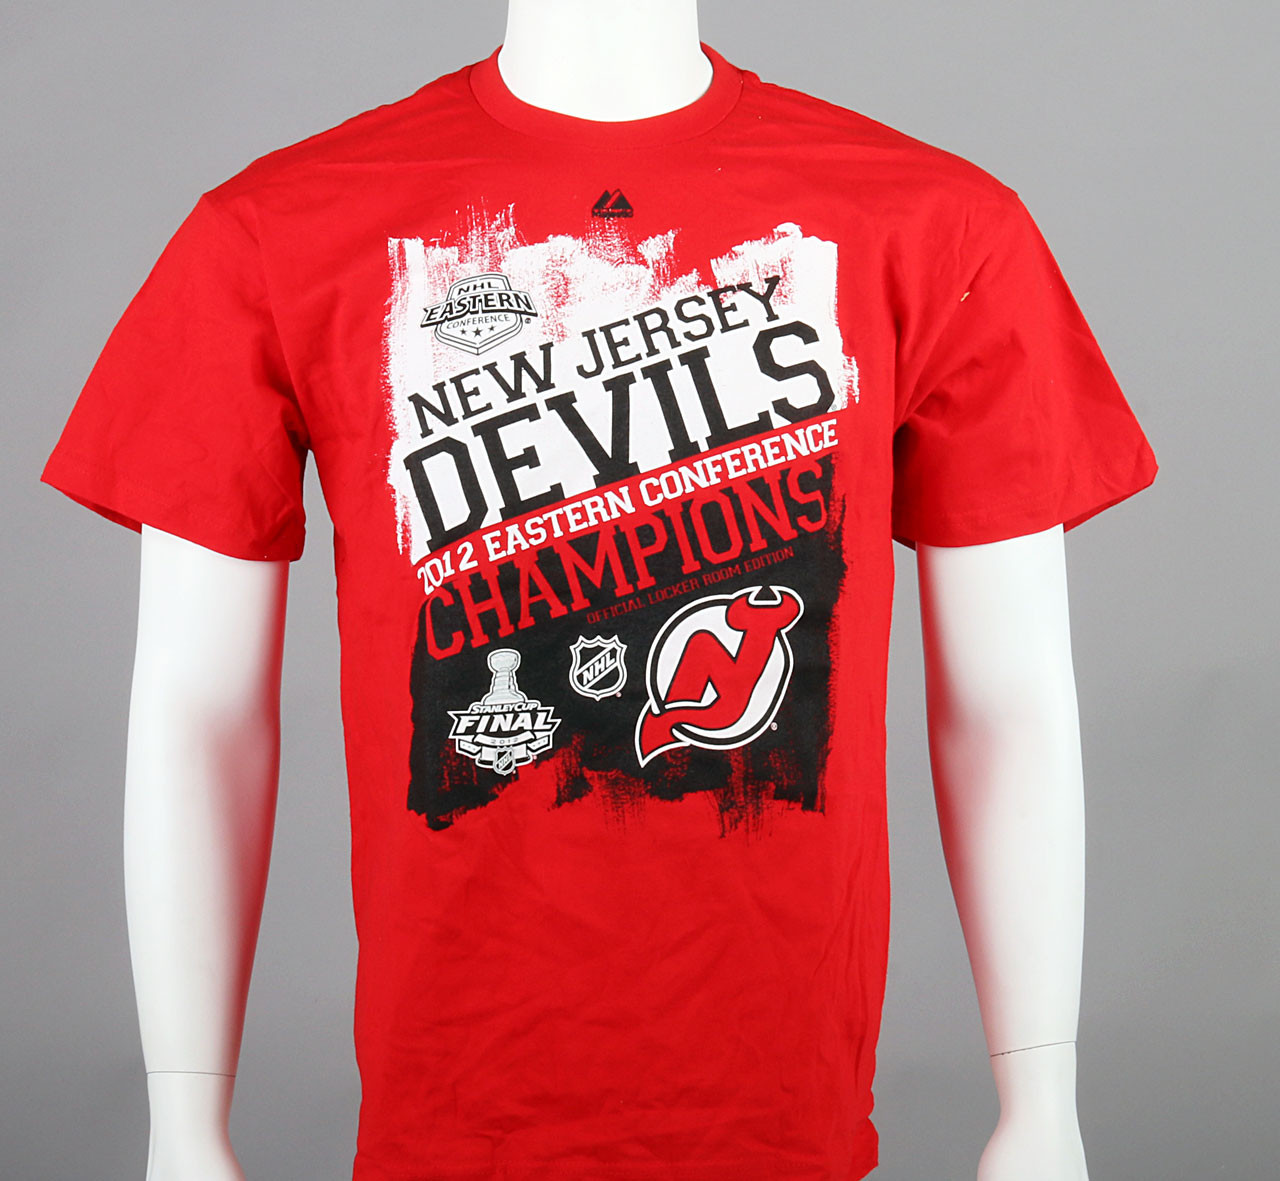 New Jersey Devils Shirt Shop, 52% OFF | espirituviajero.com